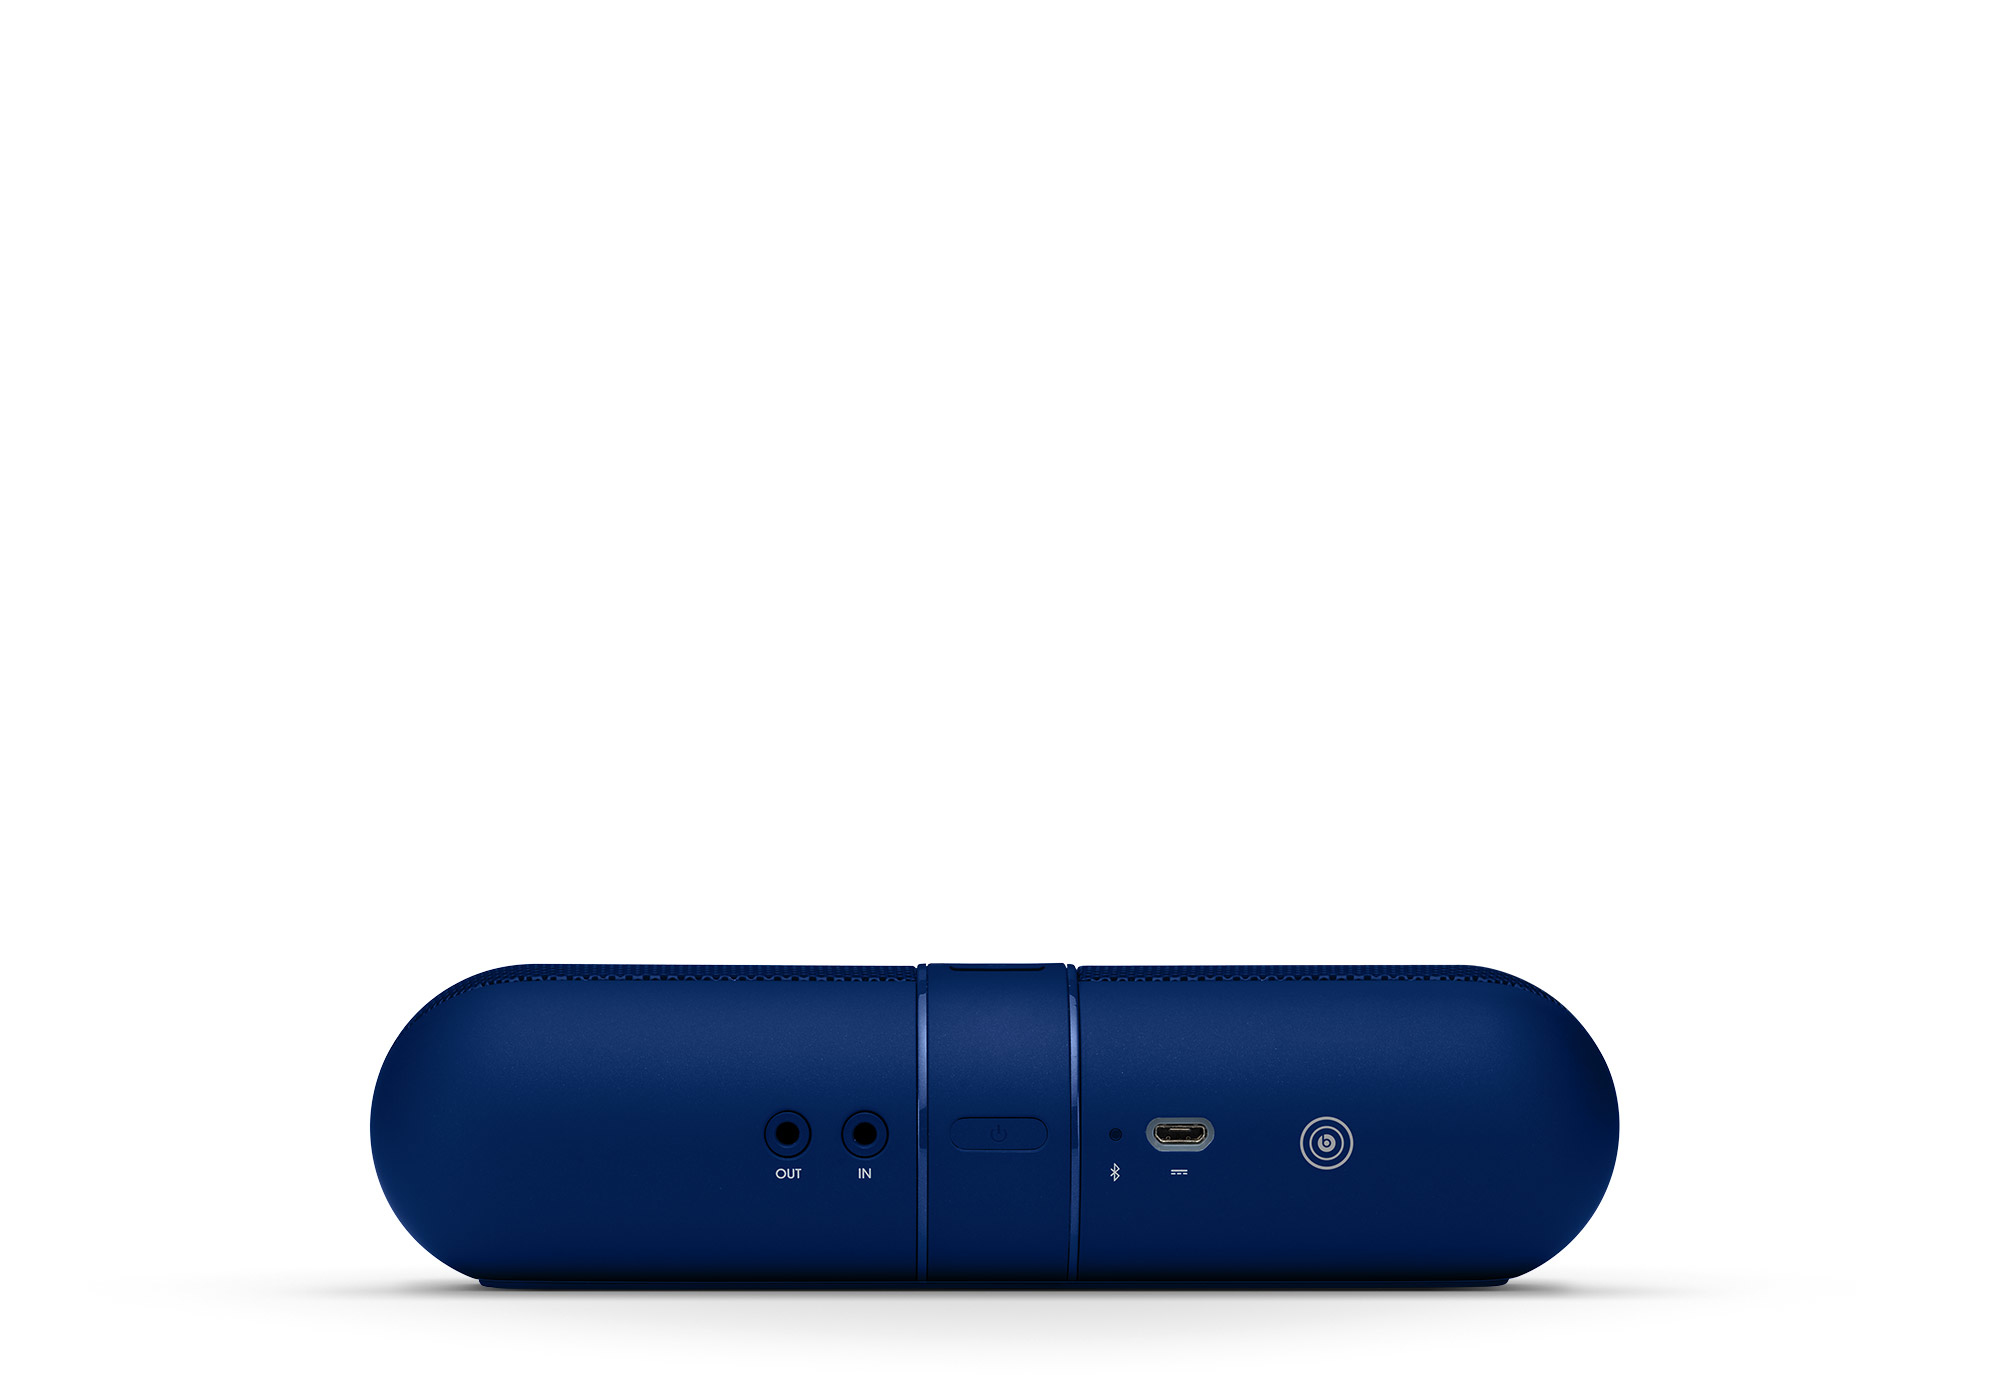 Beats Pill 2.0 Blue Speaker